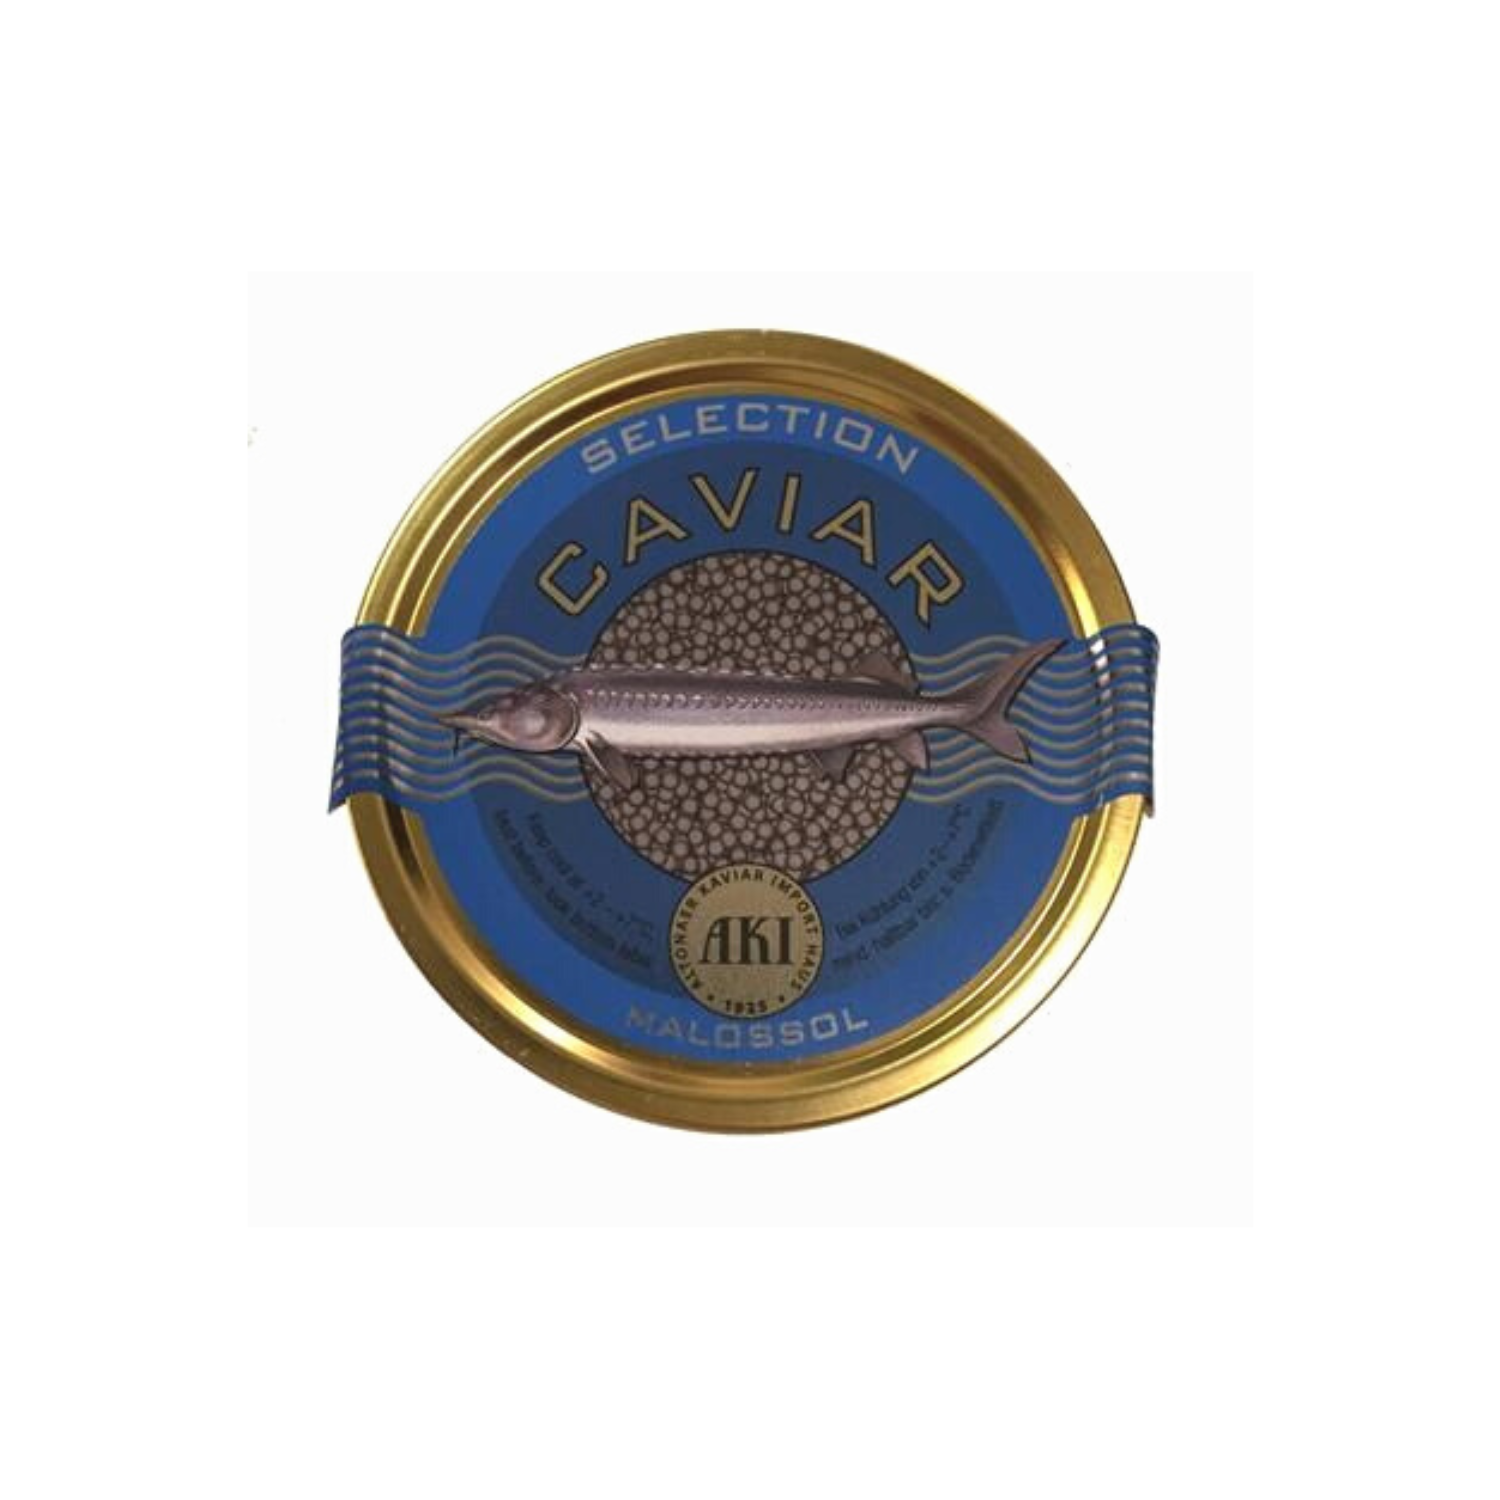 Farmet kaviar